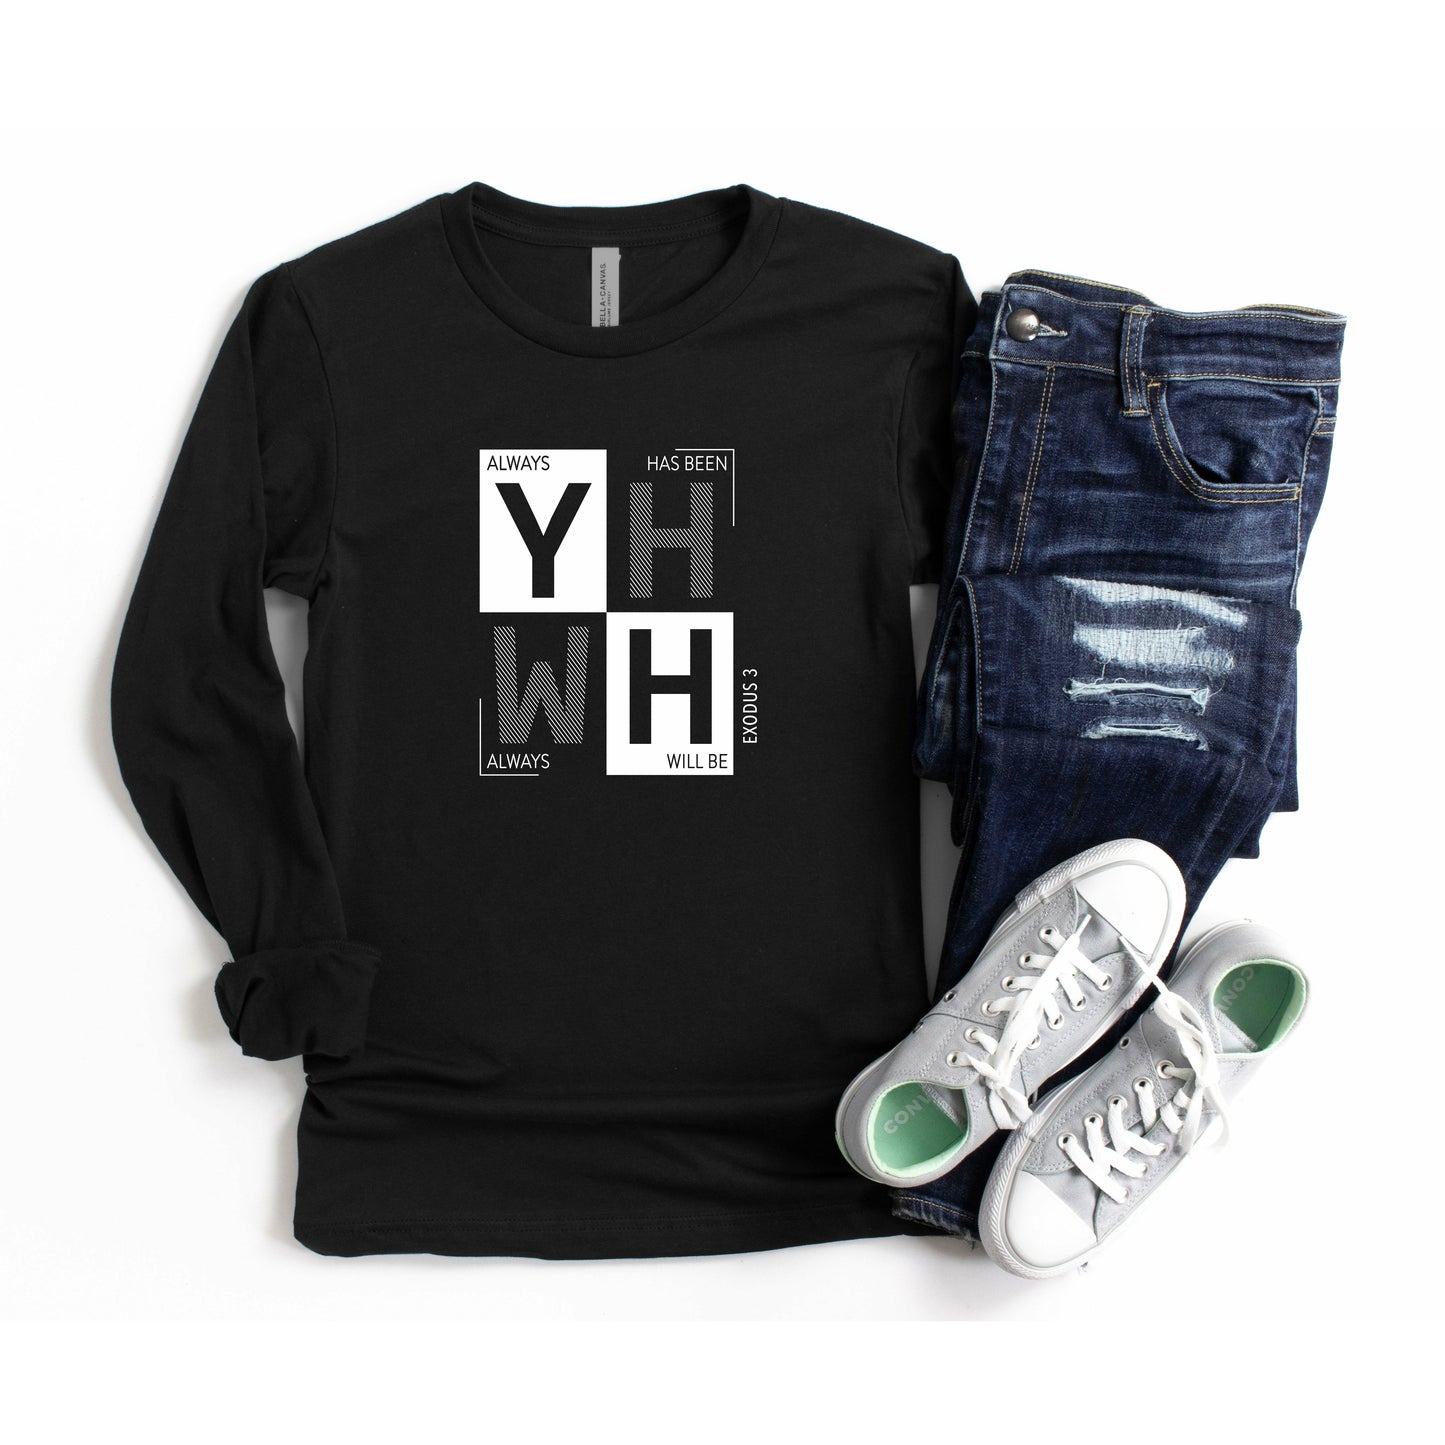 YHWH / Yahweh | Long Sleeve Shirt for Men & Women